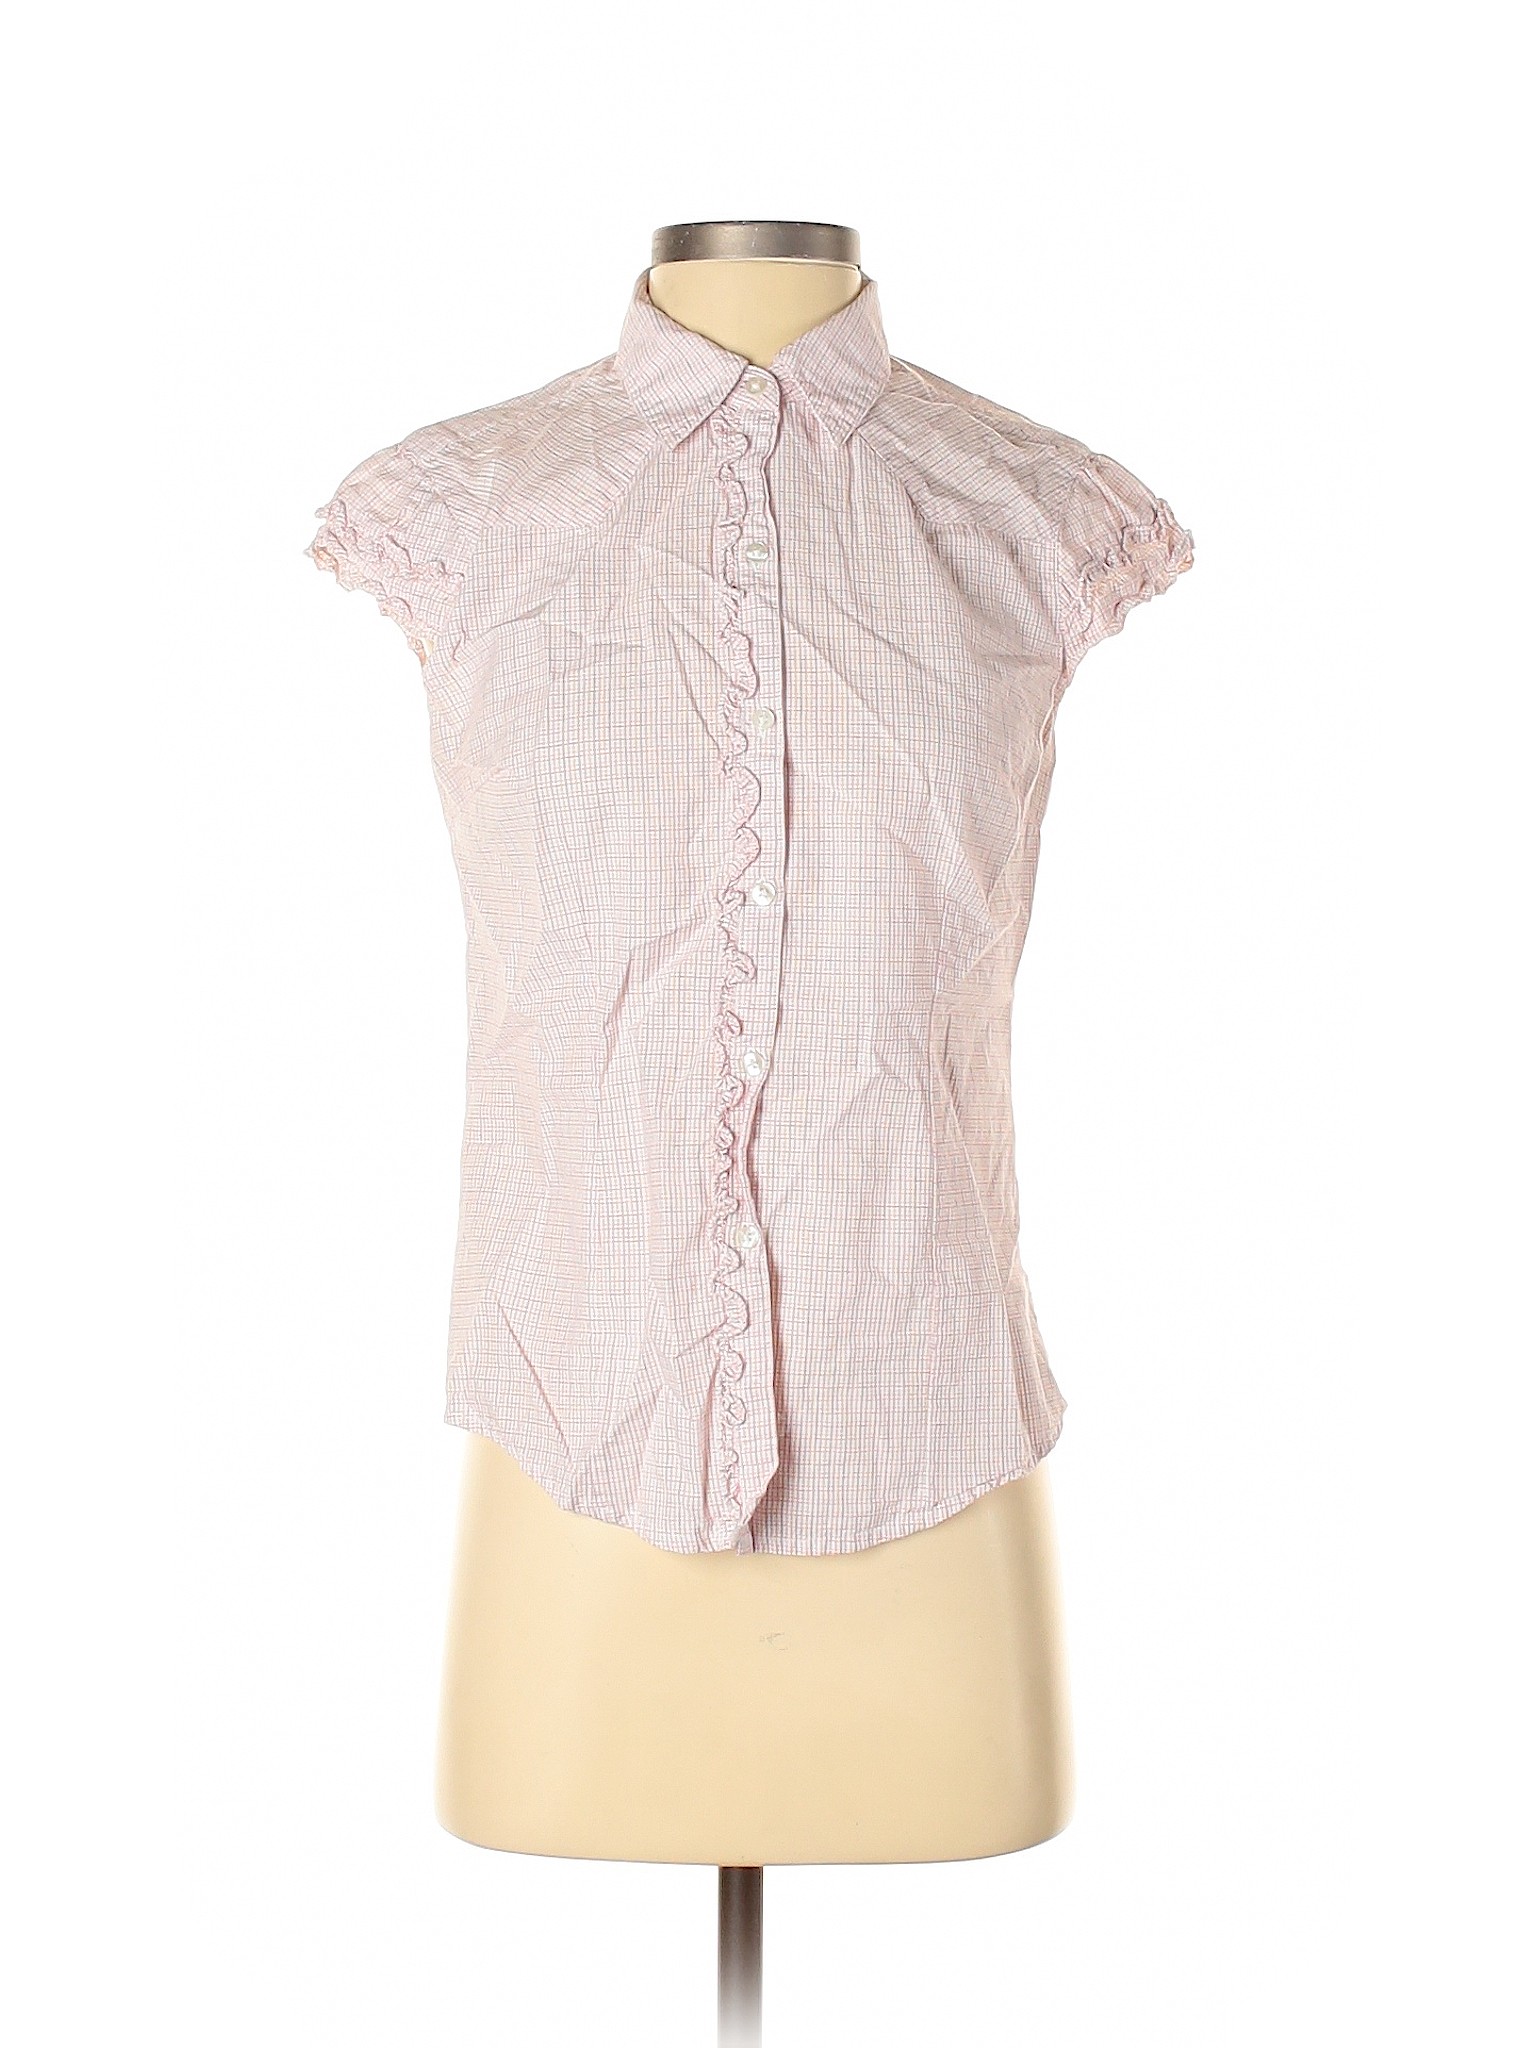 Aeropostale Women Pink Short Sleeve Button-Down Shirt S | eBay